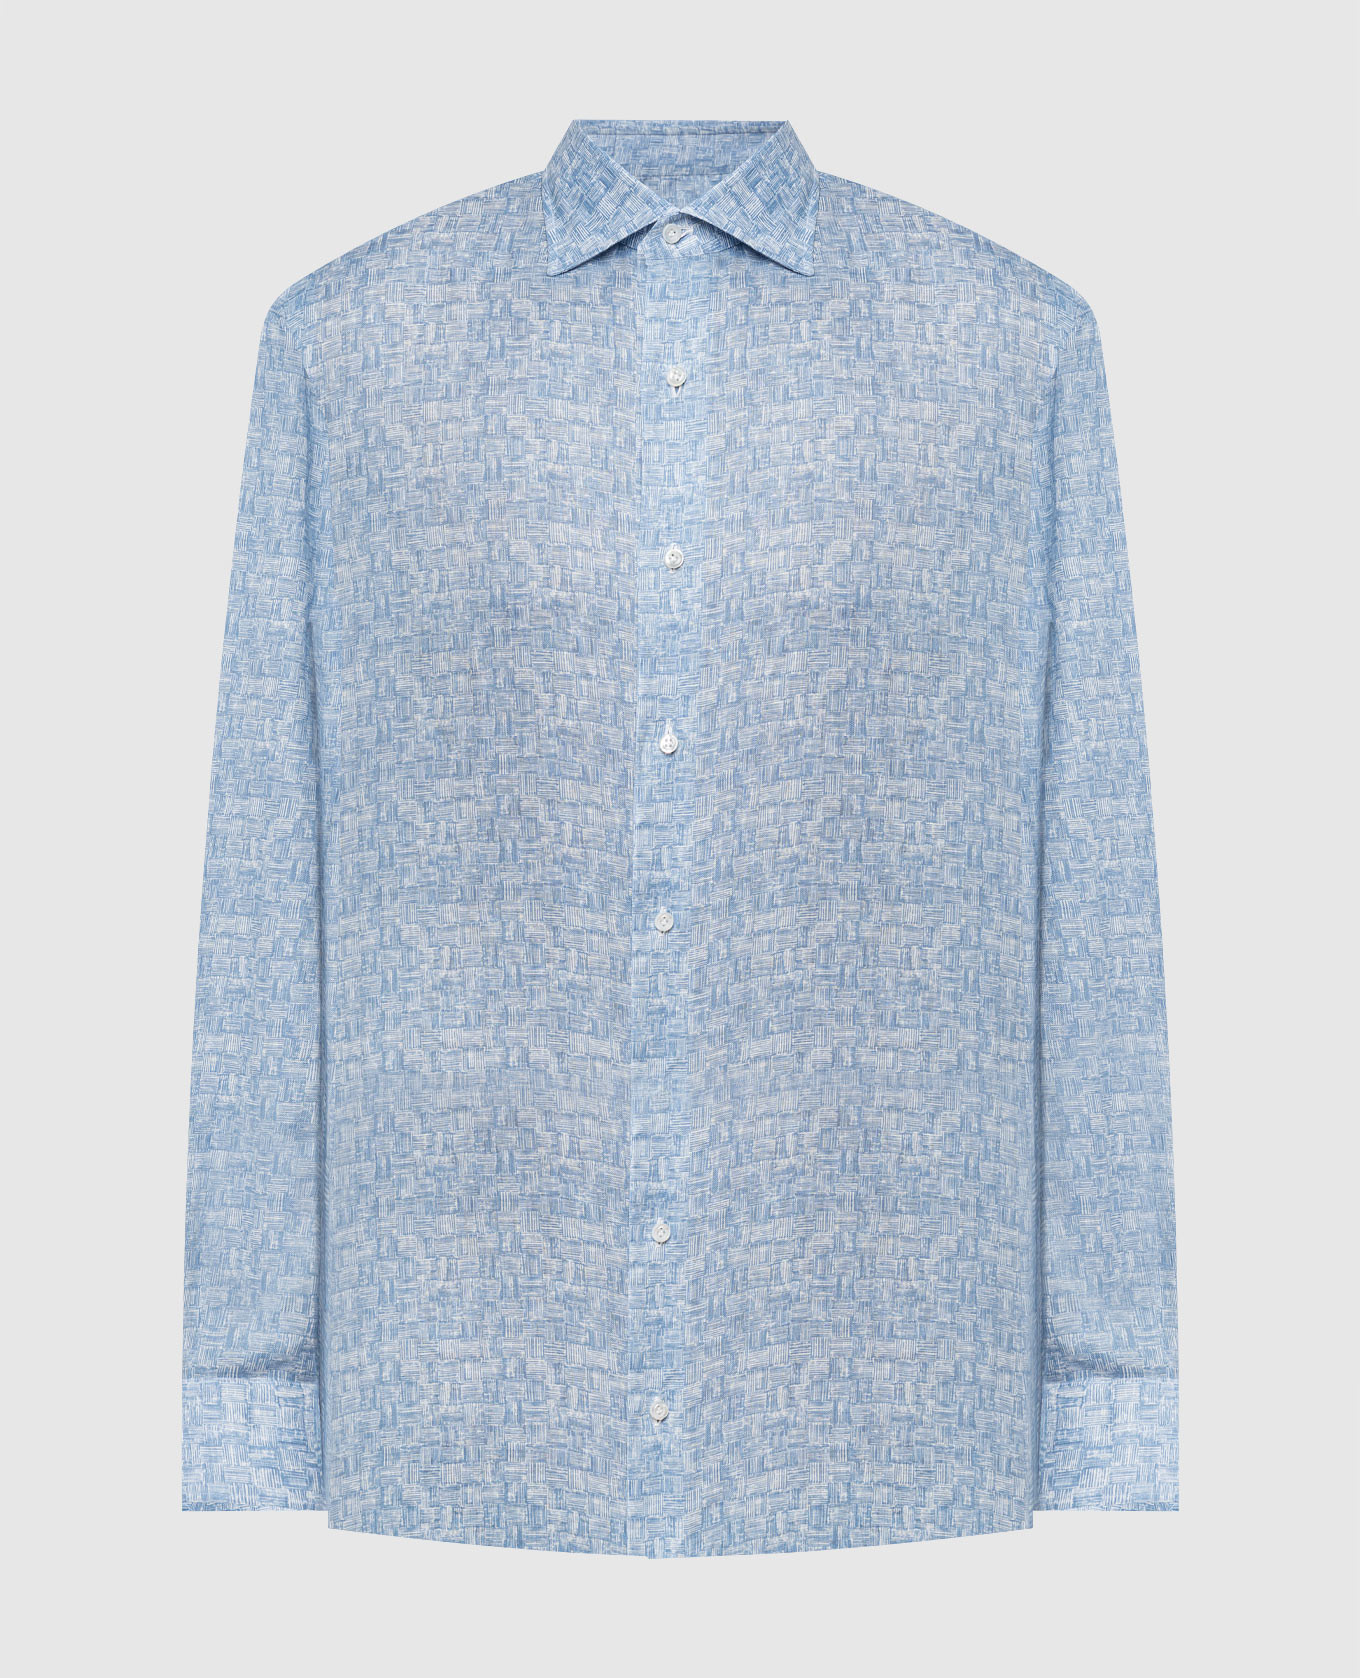 Blue shirt made of linen in a print